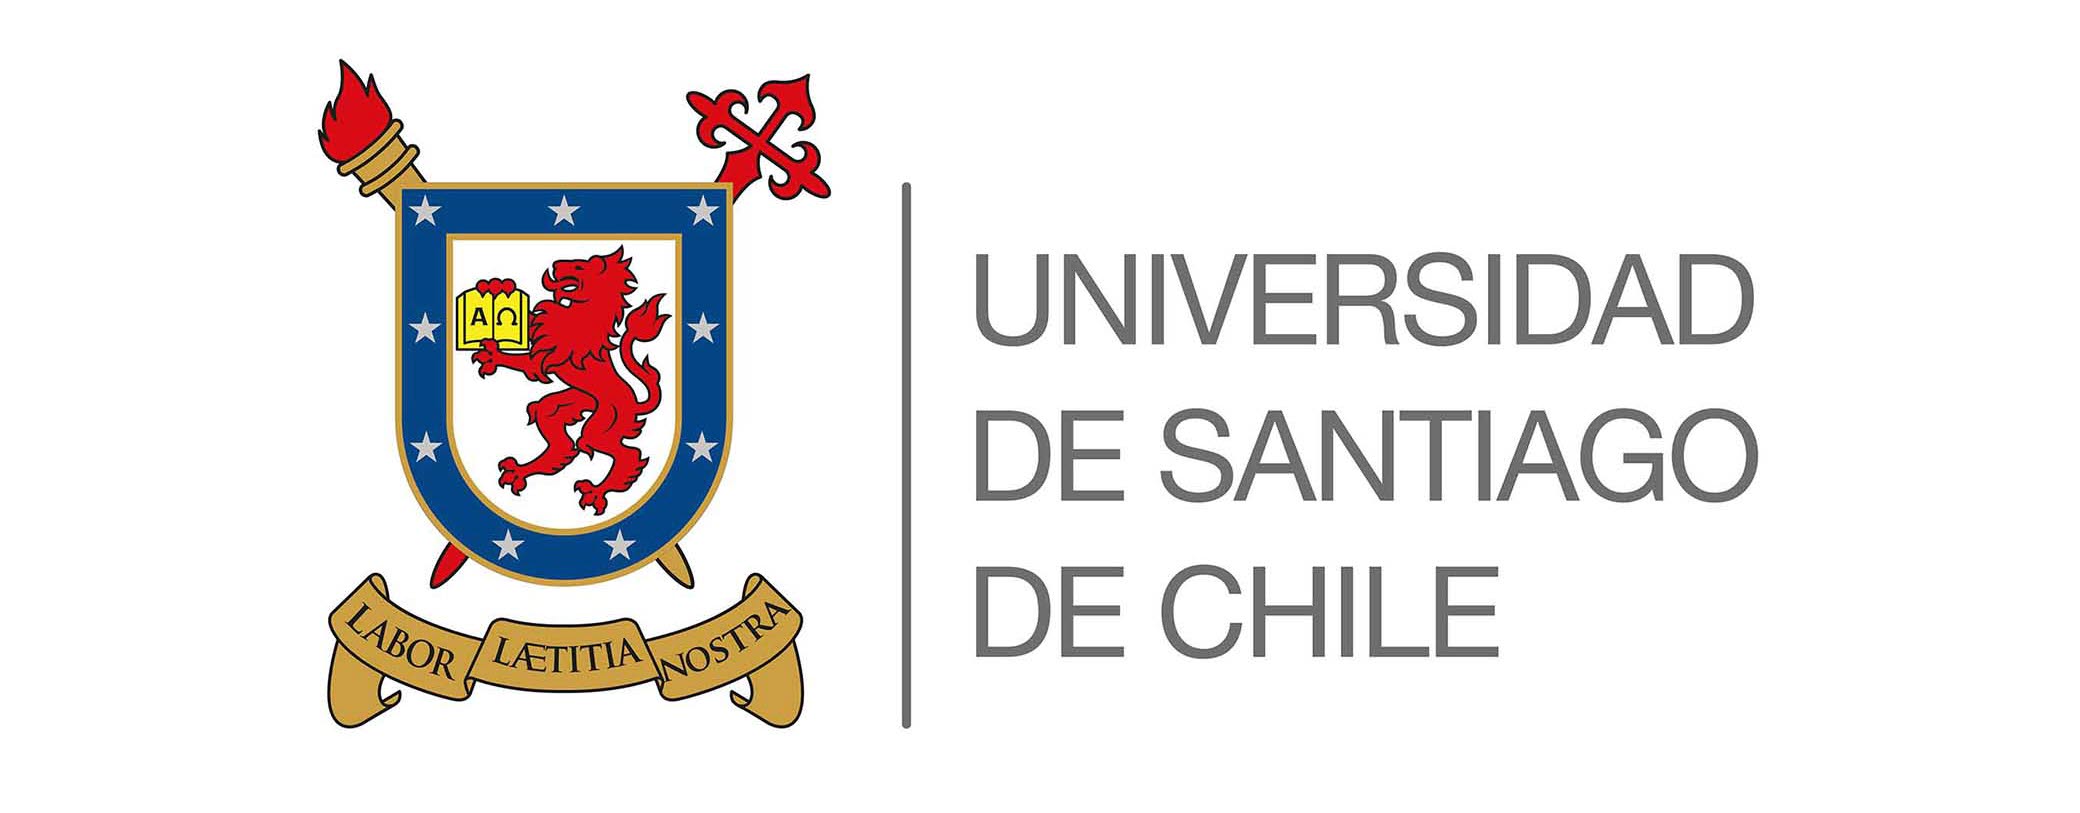 University of Santiago Chile logo